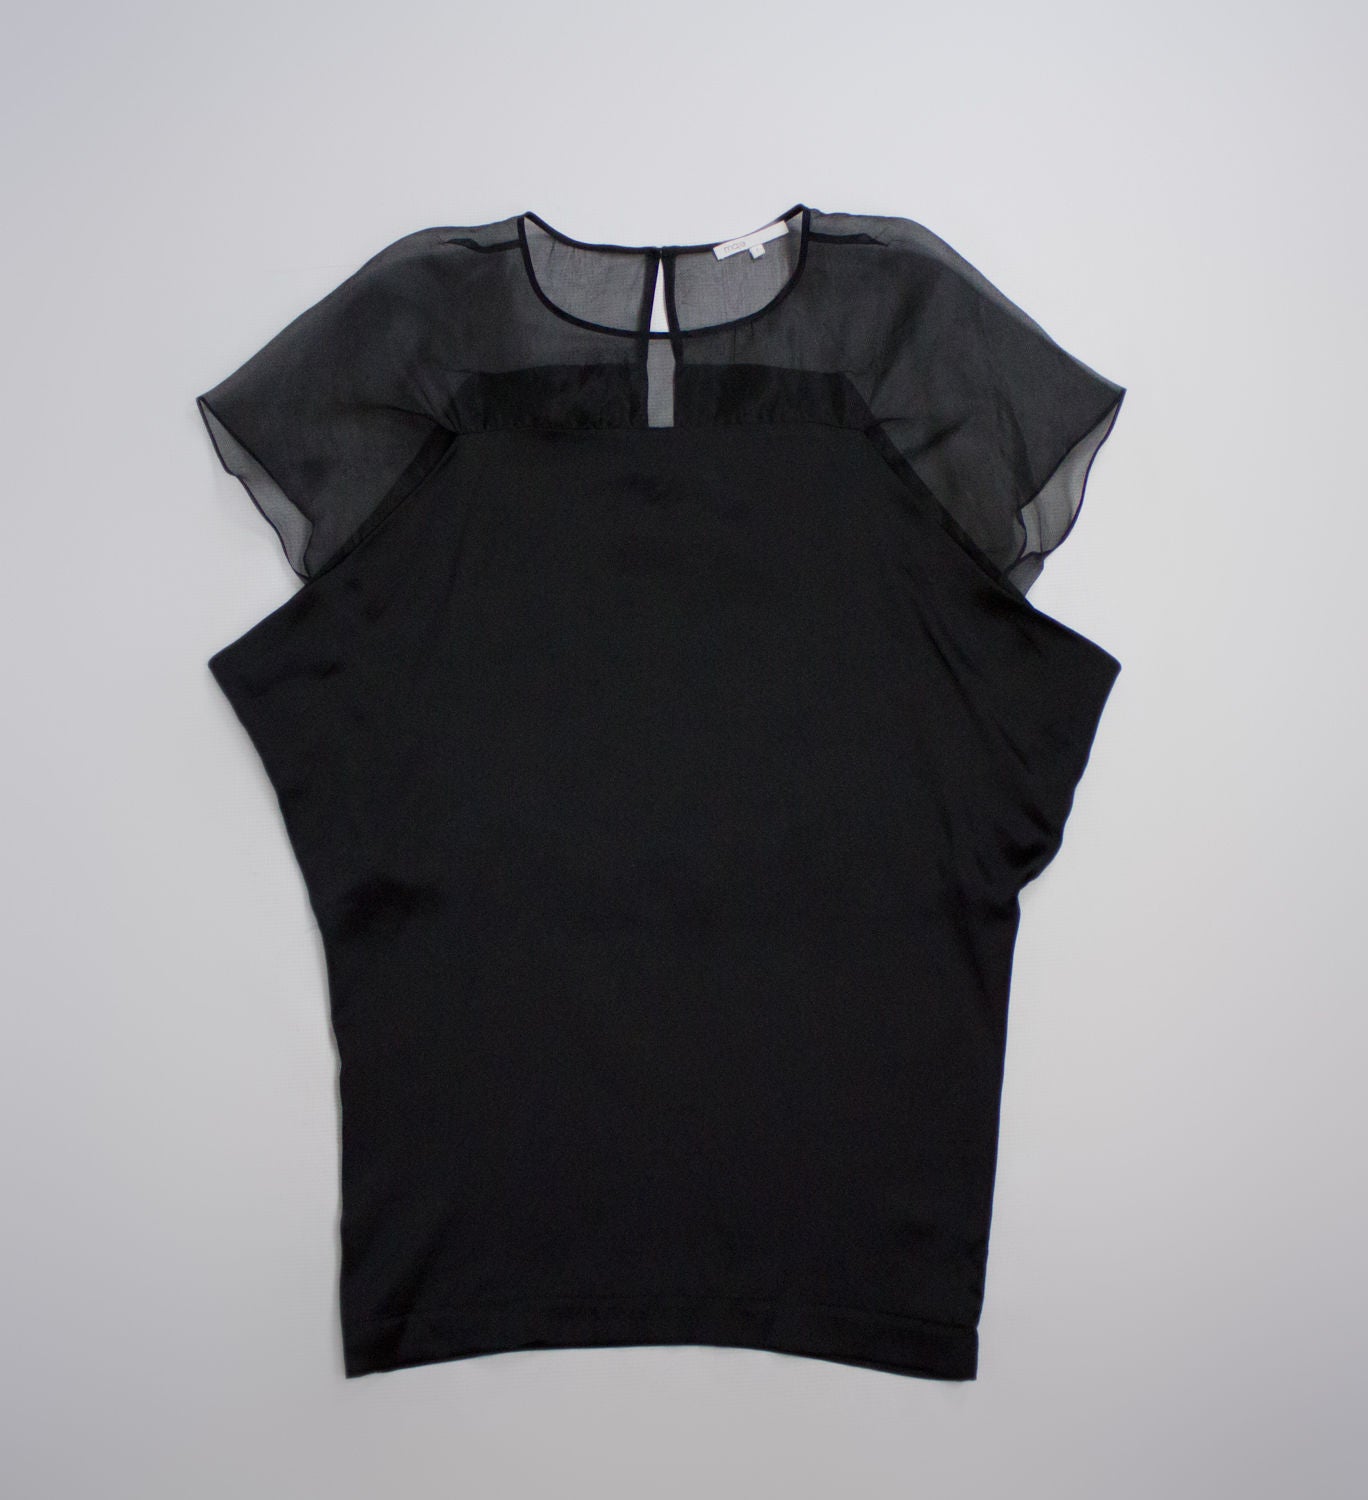 MAJE 100% Silk Organza Black Dress Size 1  (US 4, EU 34, UK 6 ) - secondfirst